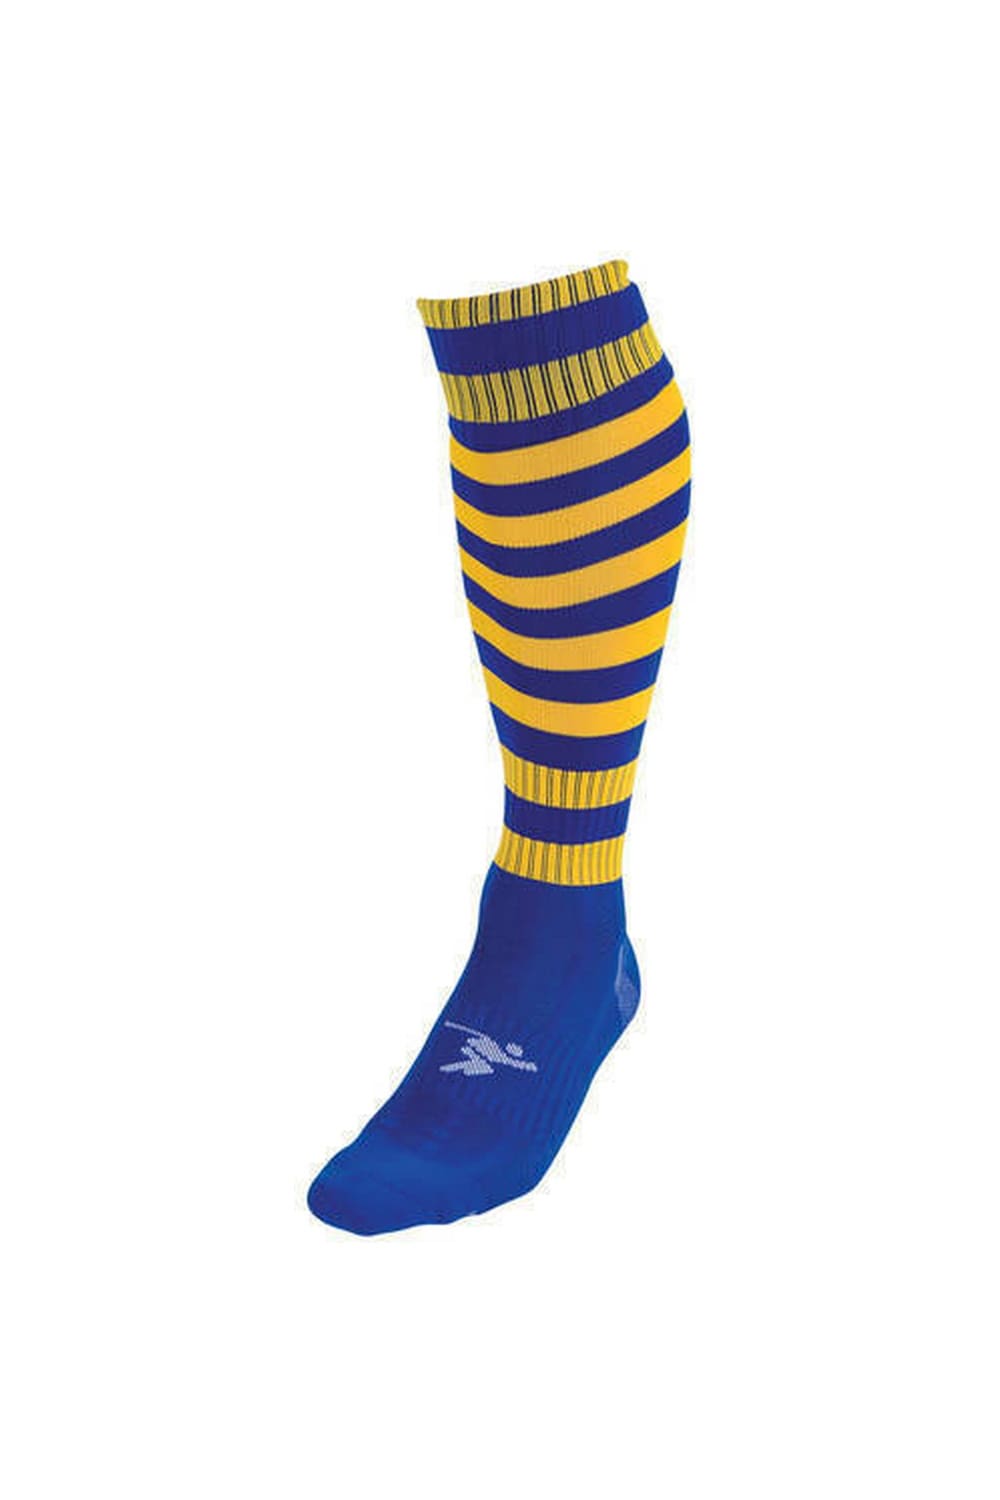 Precision Unisex Adult Pro Hooped Football Socks (Royal Blue/Gold)